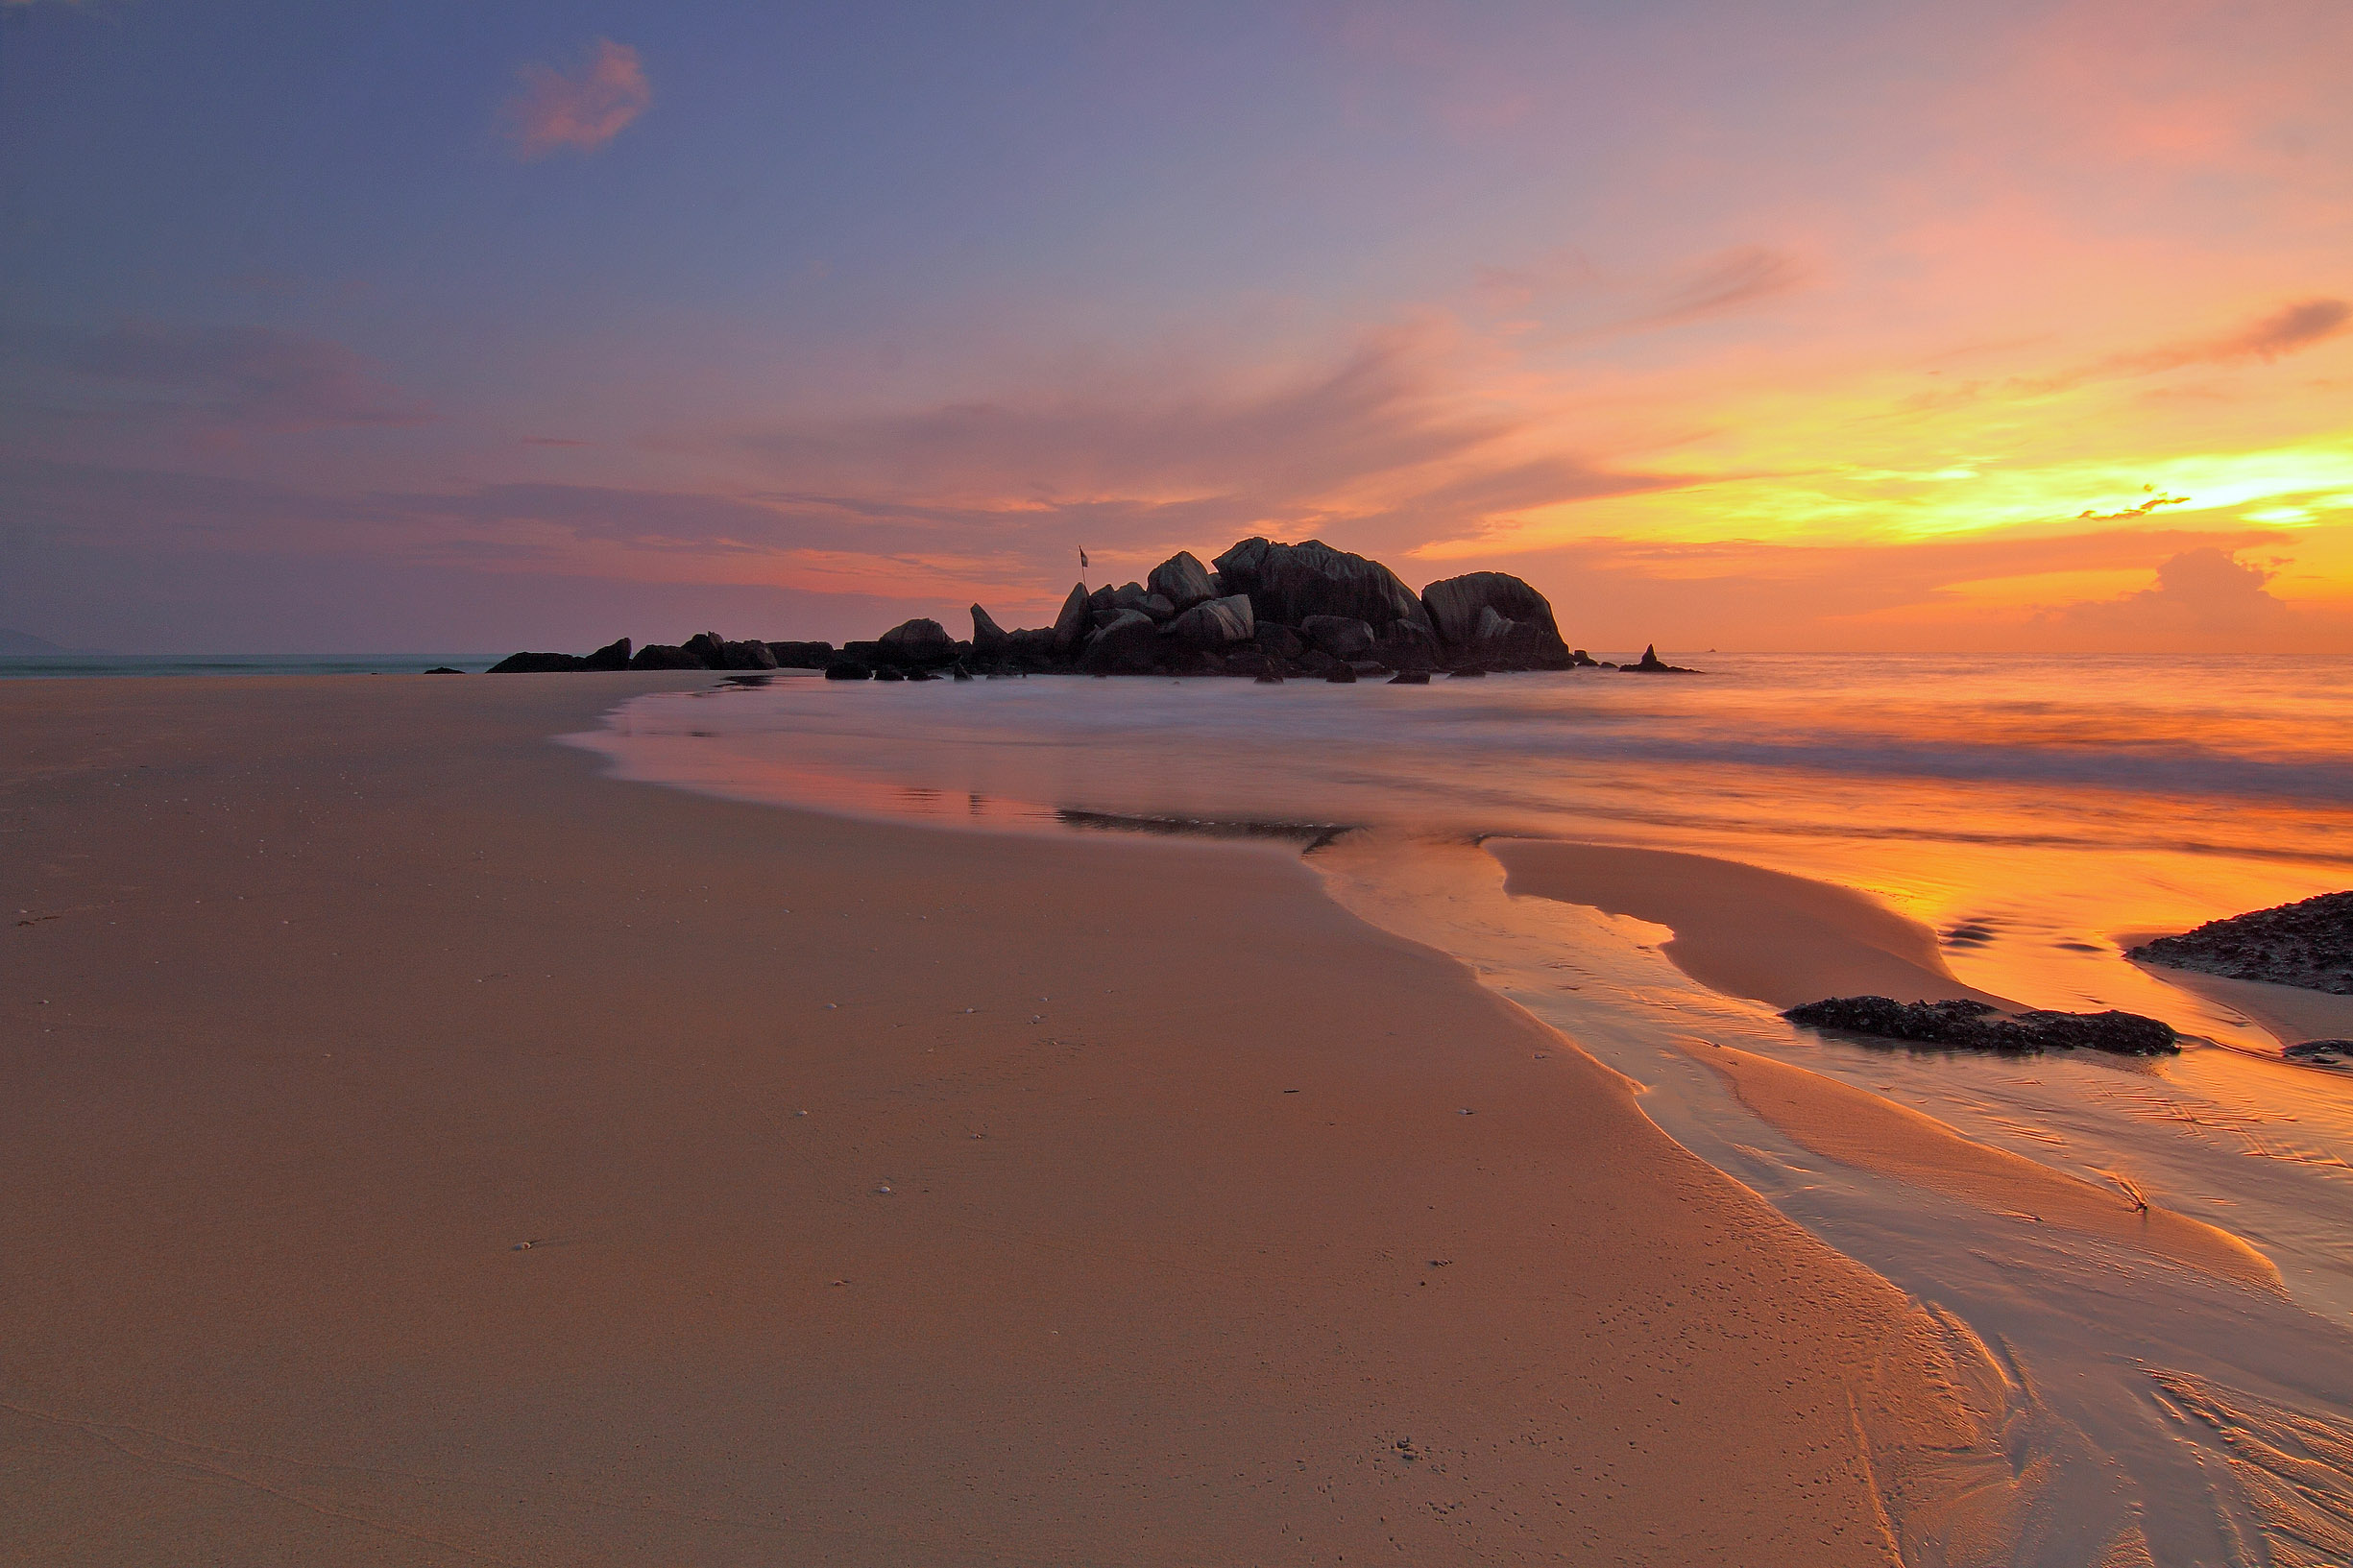 Sunset over the sandy beach image - Free stock photo - Public Domain ...